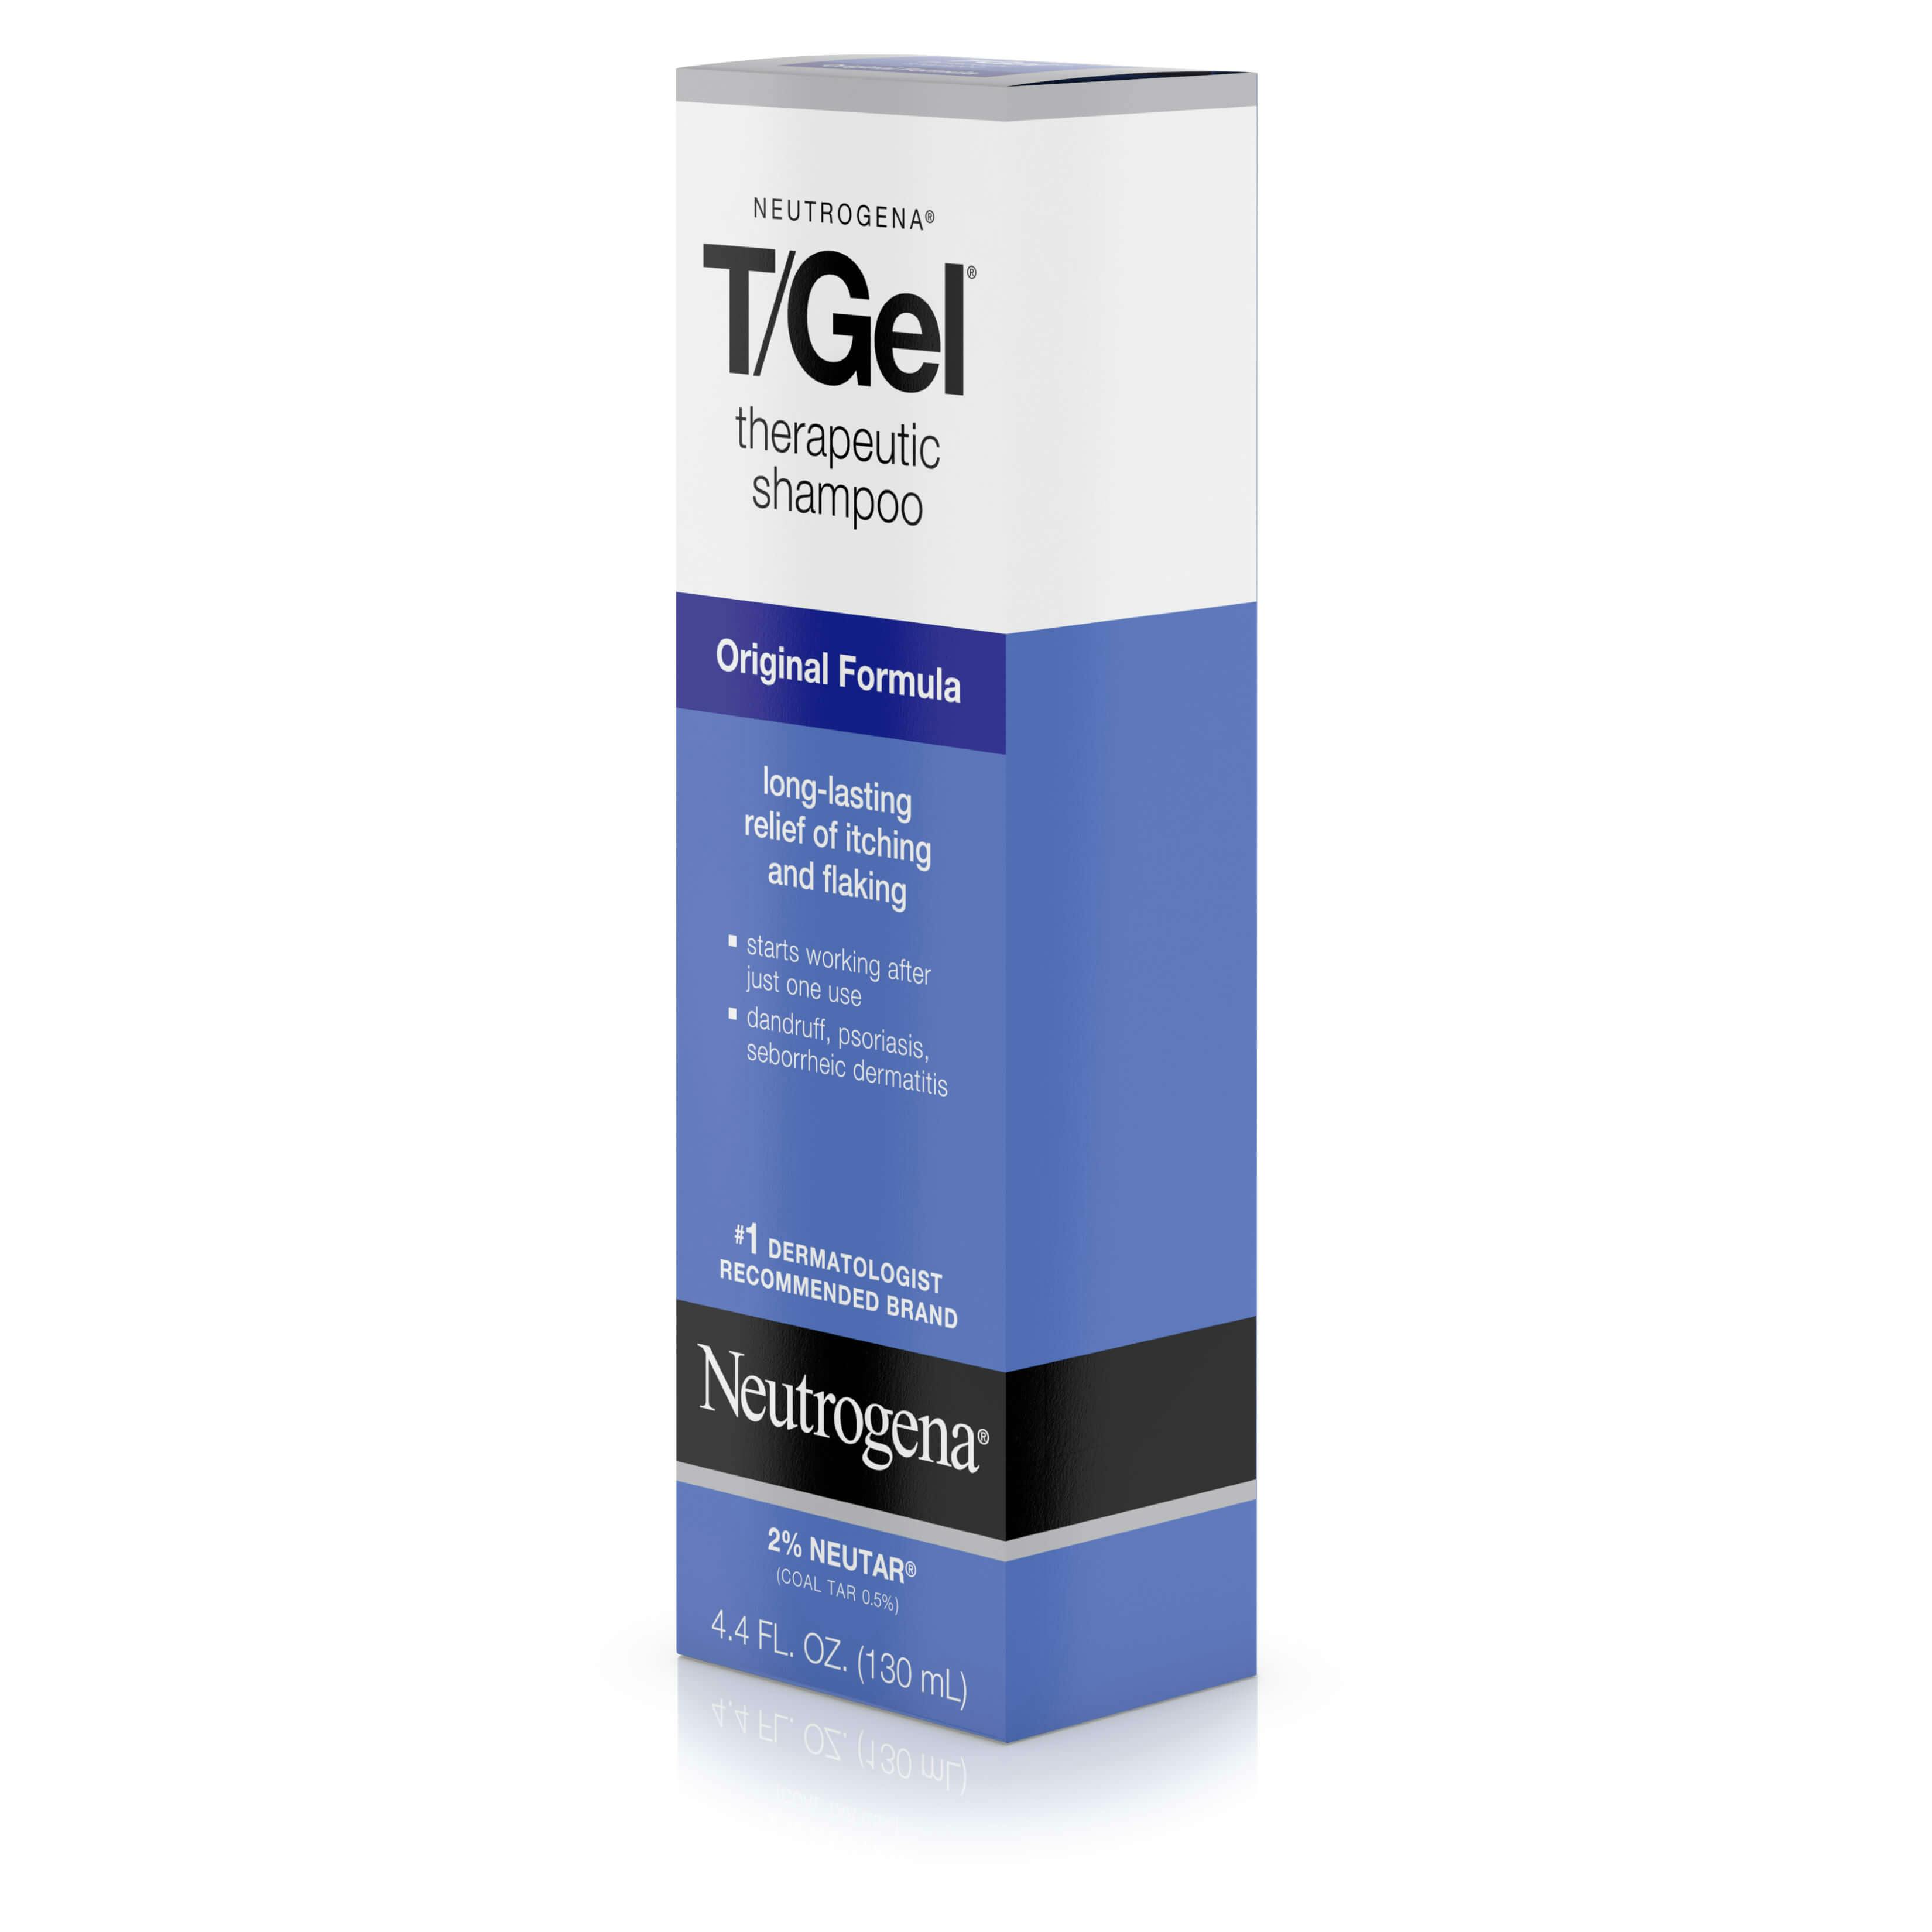 T/Gel® Therapeutic Shampoo-Original Formula